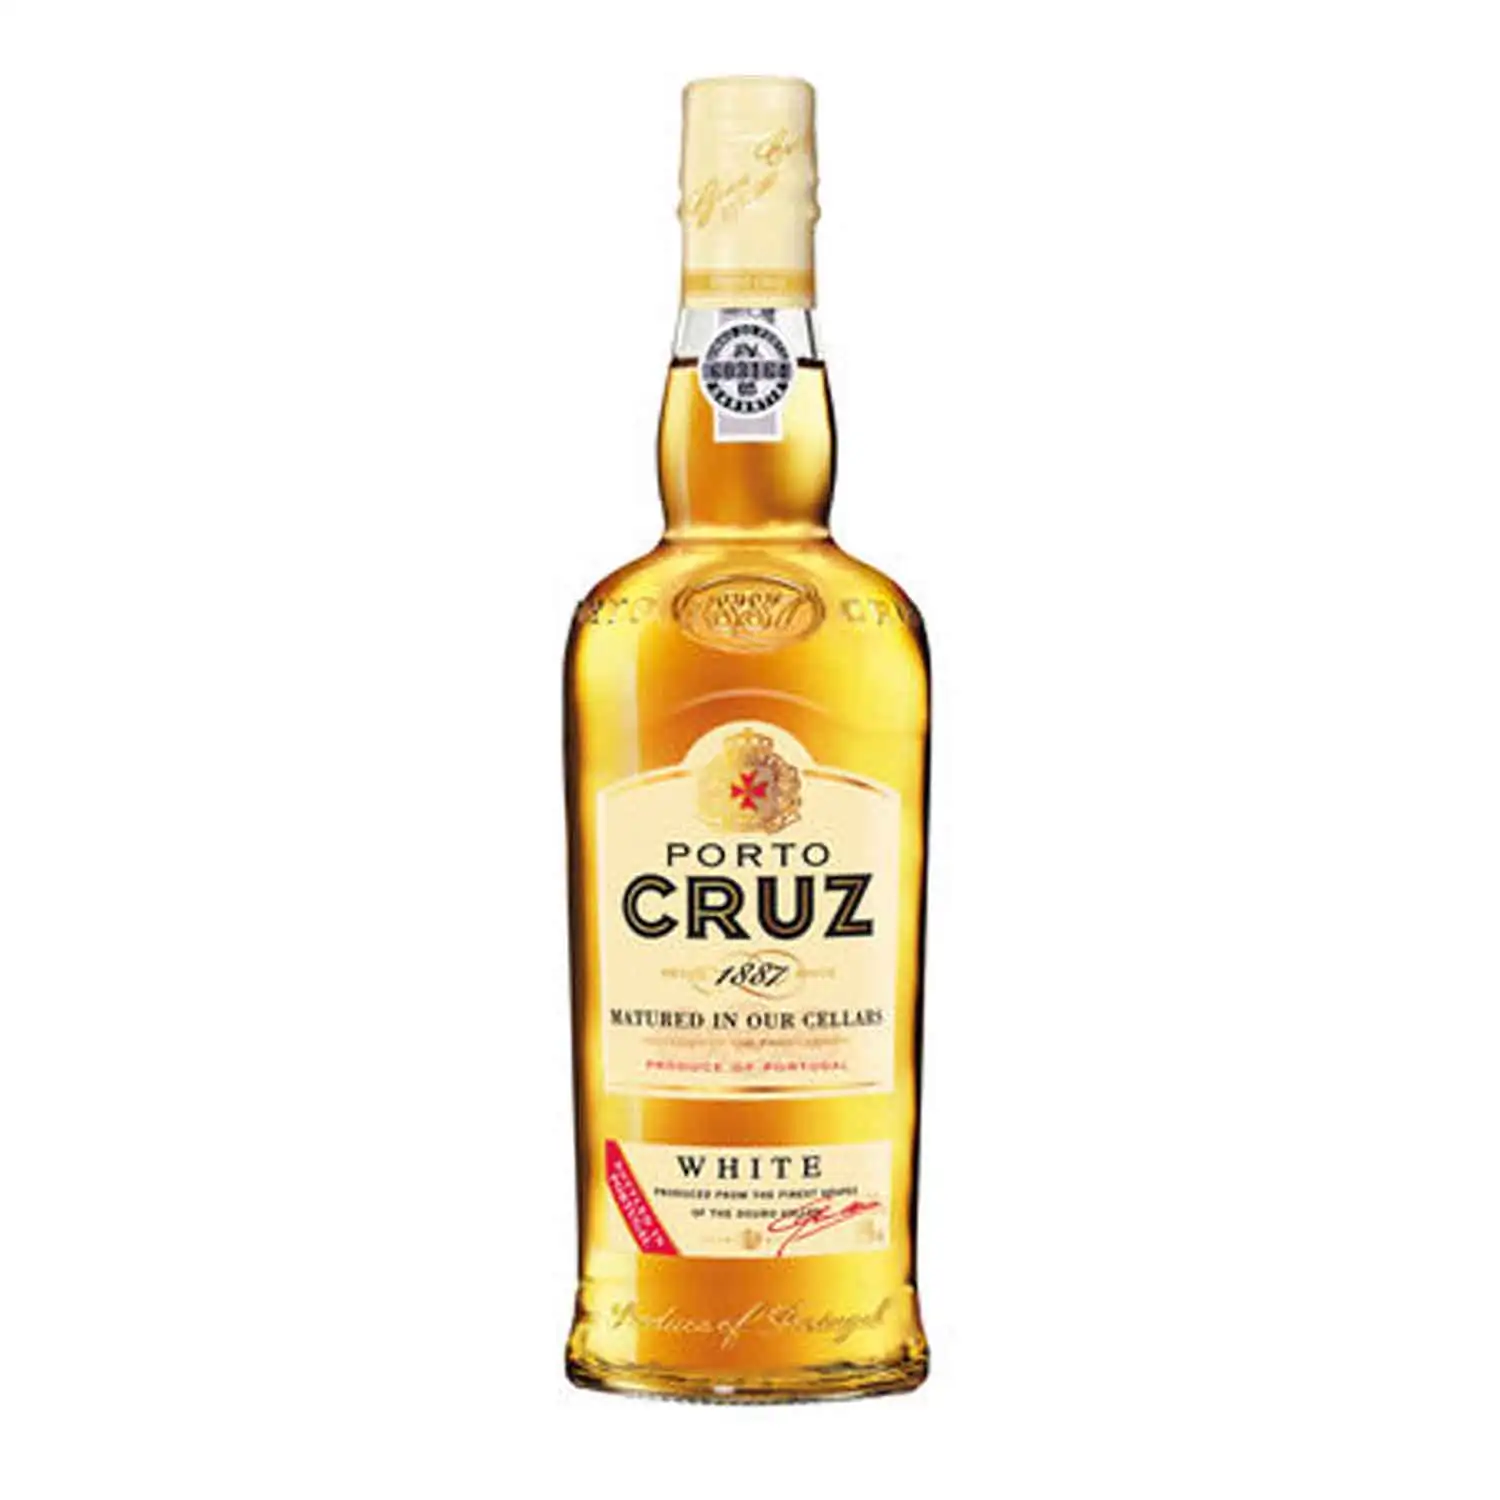 Cruz white 75cl Alc 19% - Buy at Real Tobacco